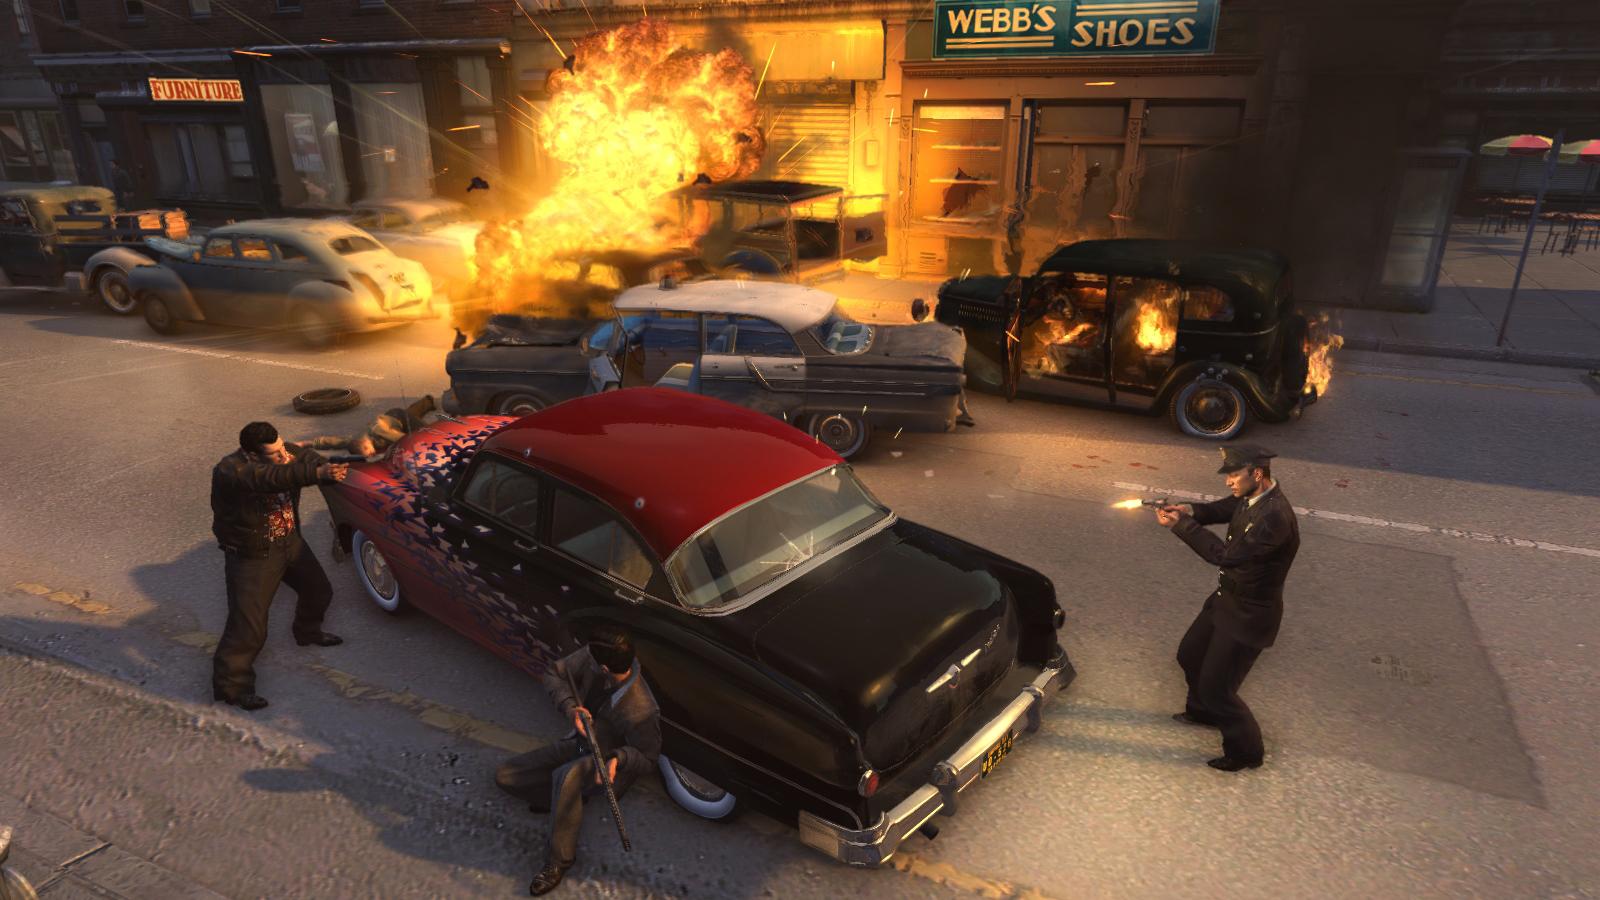 Mafia II (Classic) on Steam